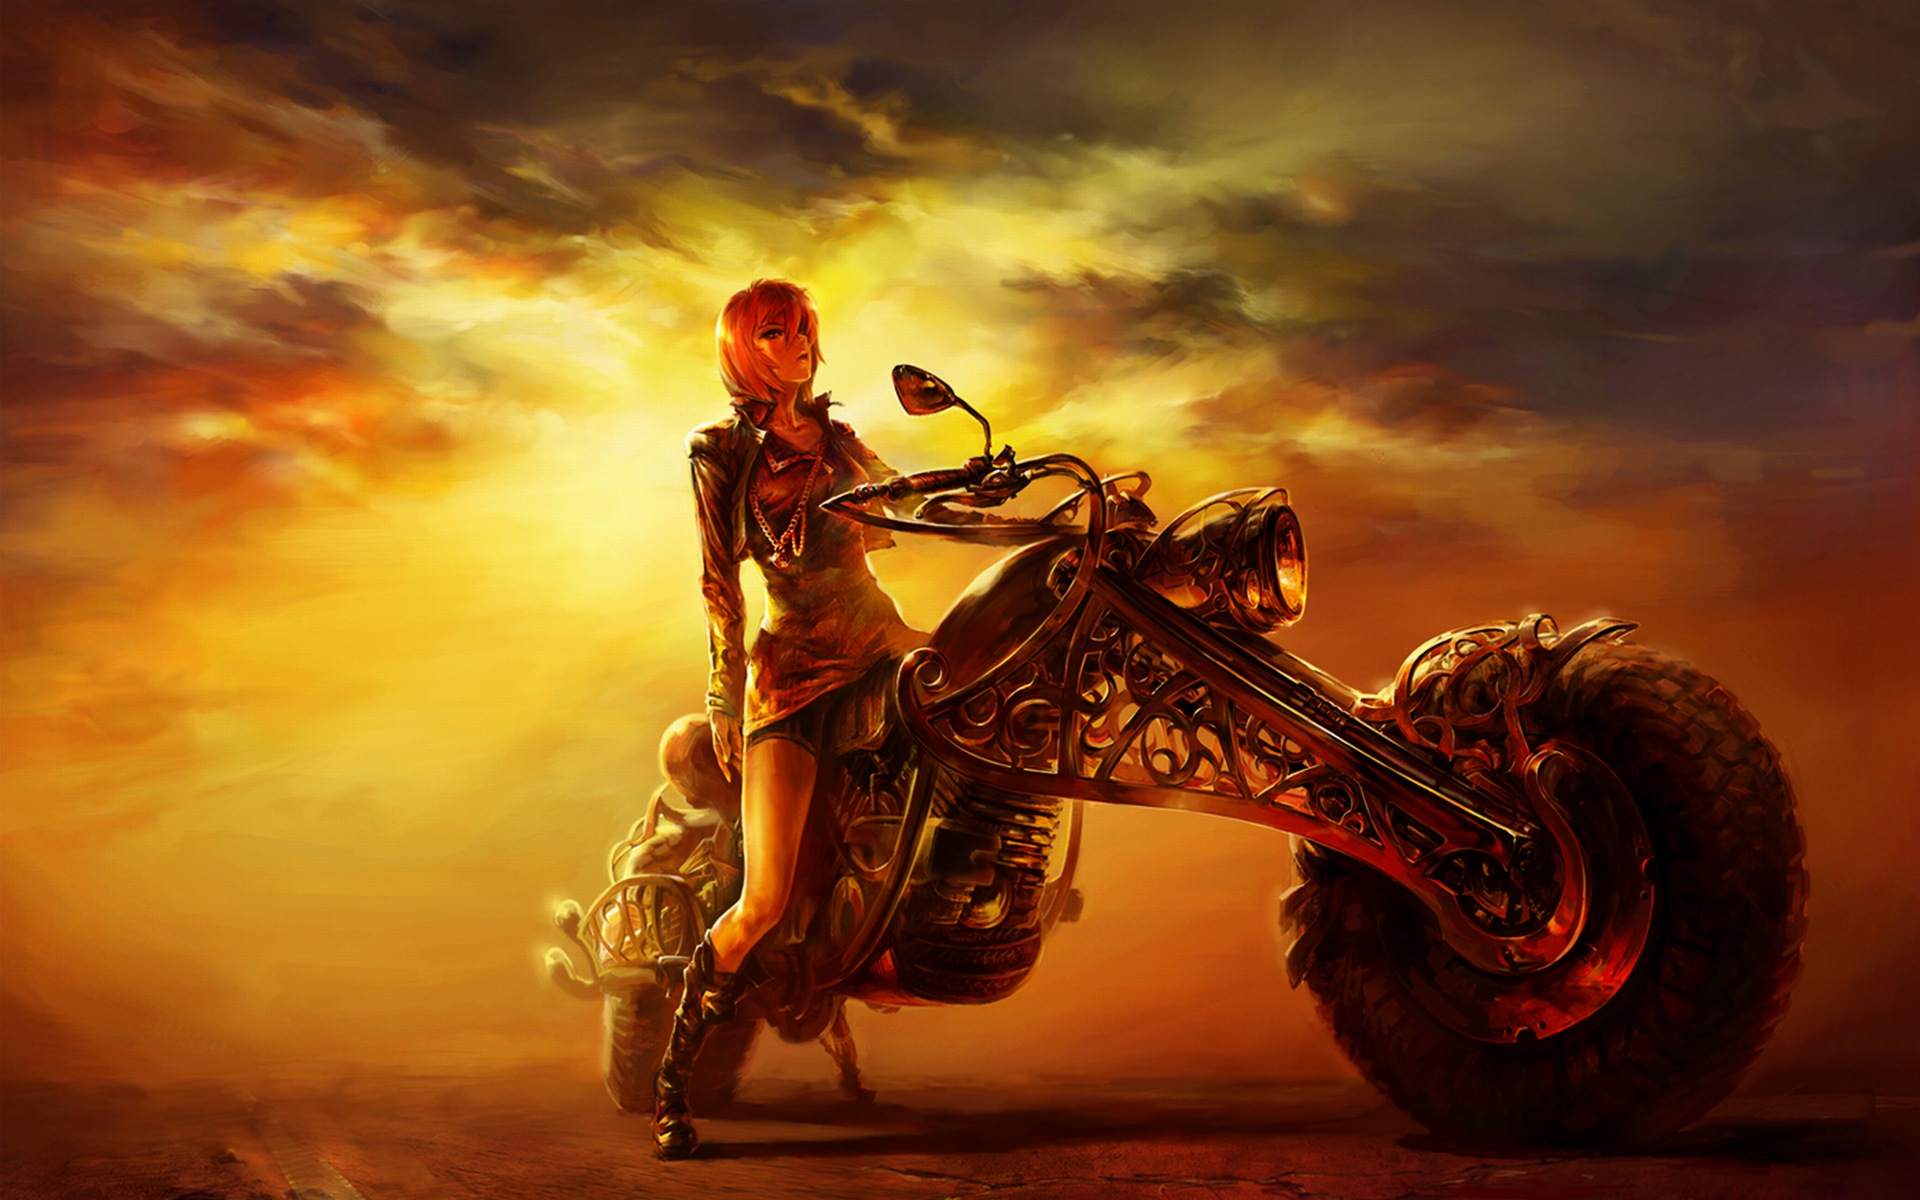 cg girl wallpaper,motocicleta,vehículo,carreras en el desierto,motociclismo,cielo